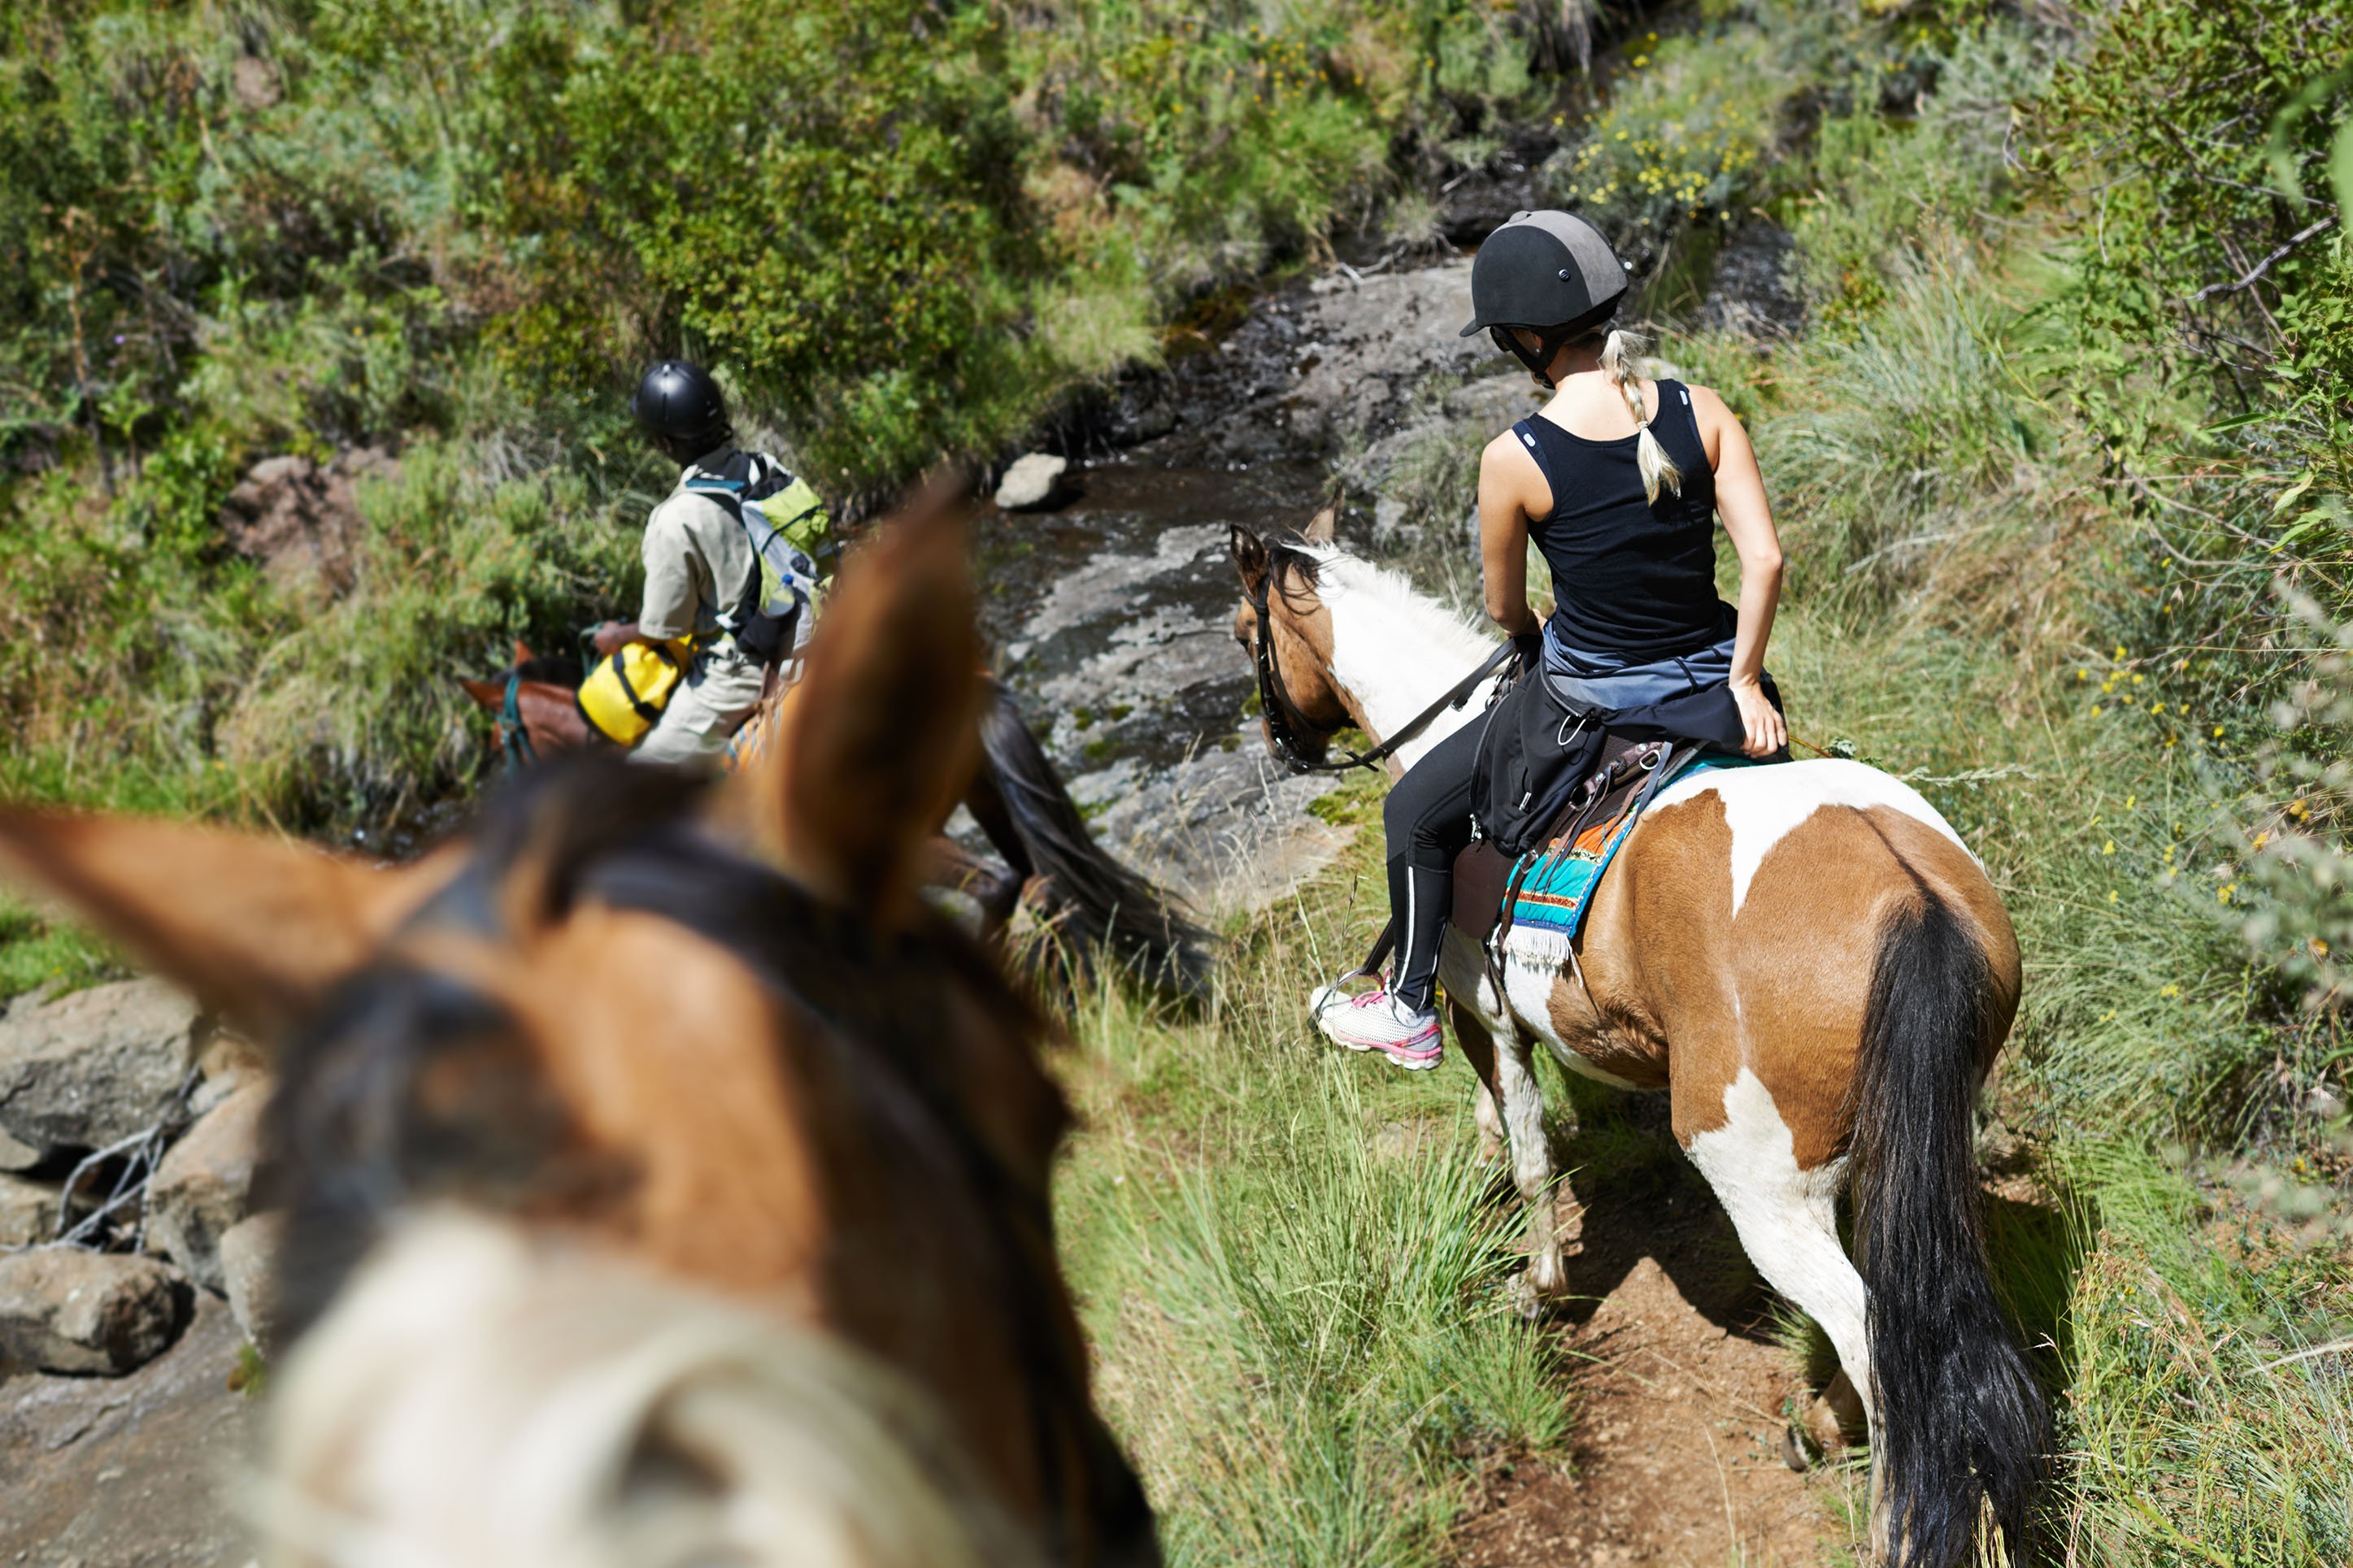 Horseback riding in the mountains near a creek